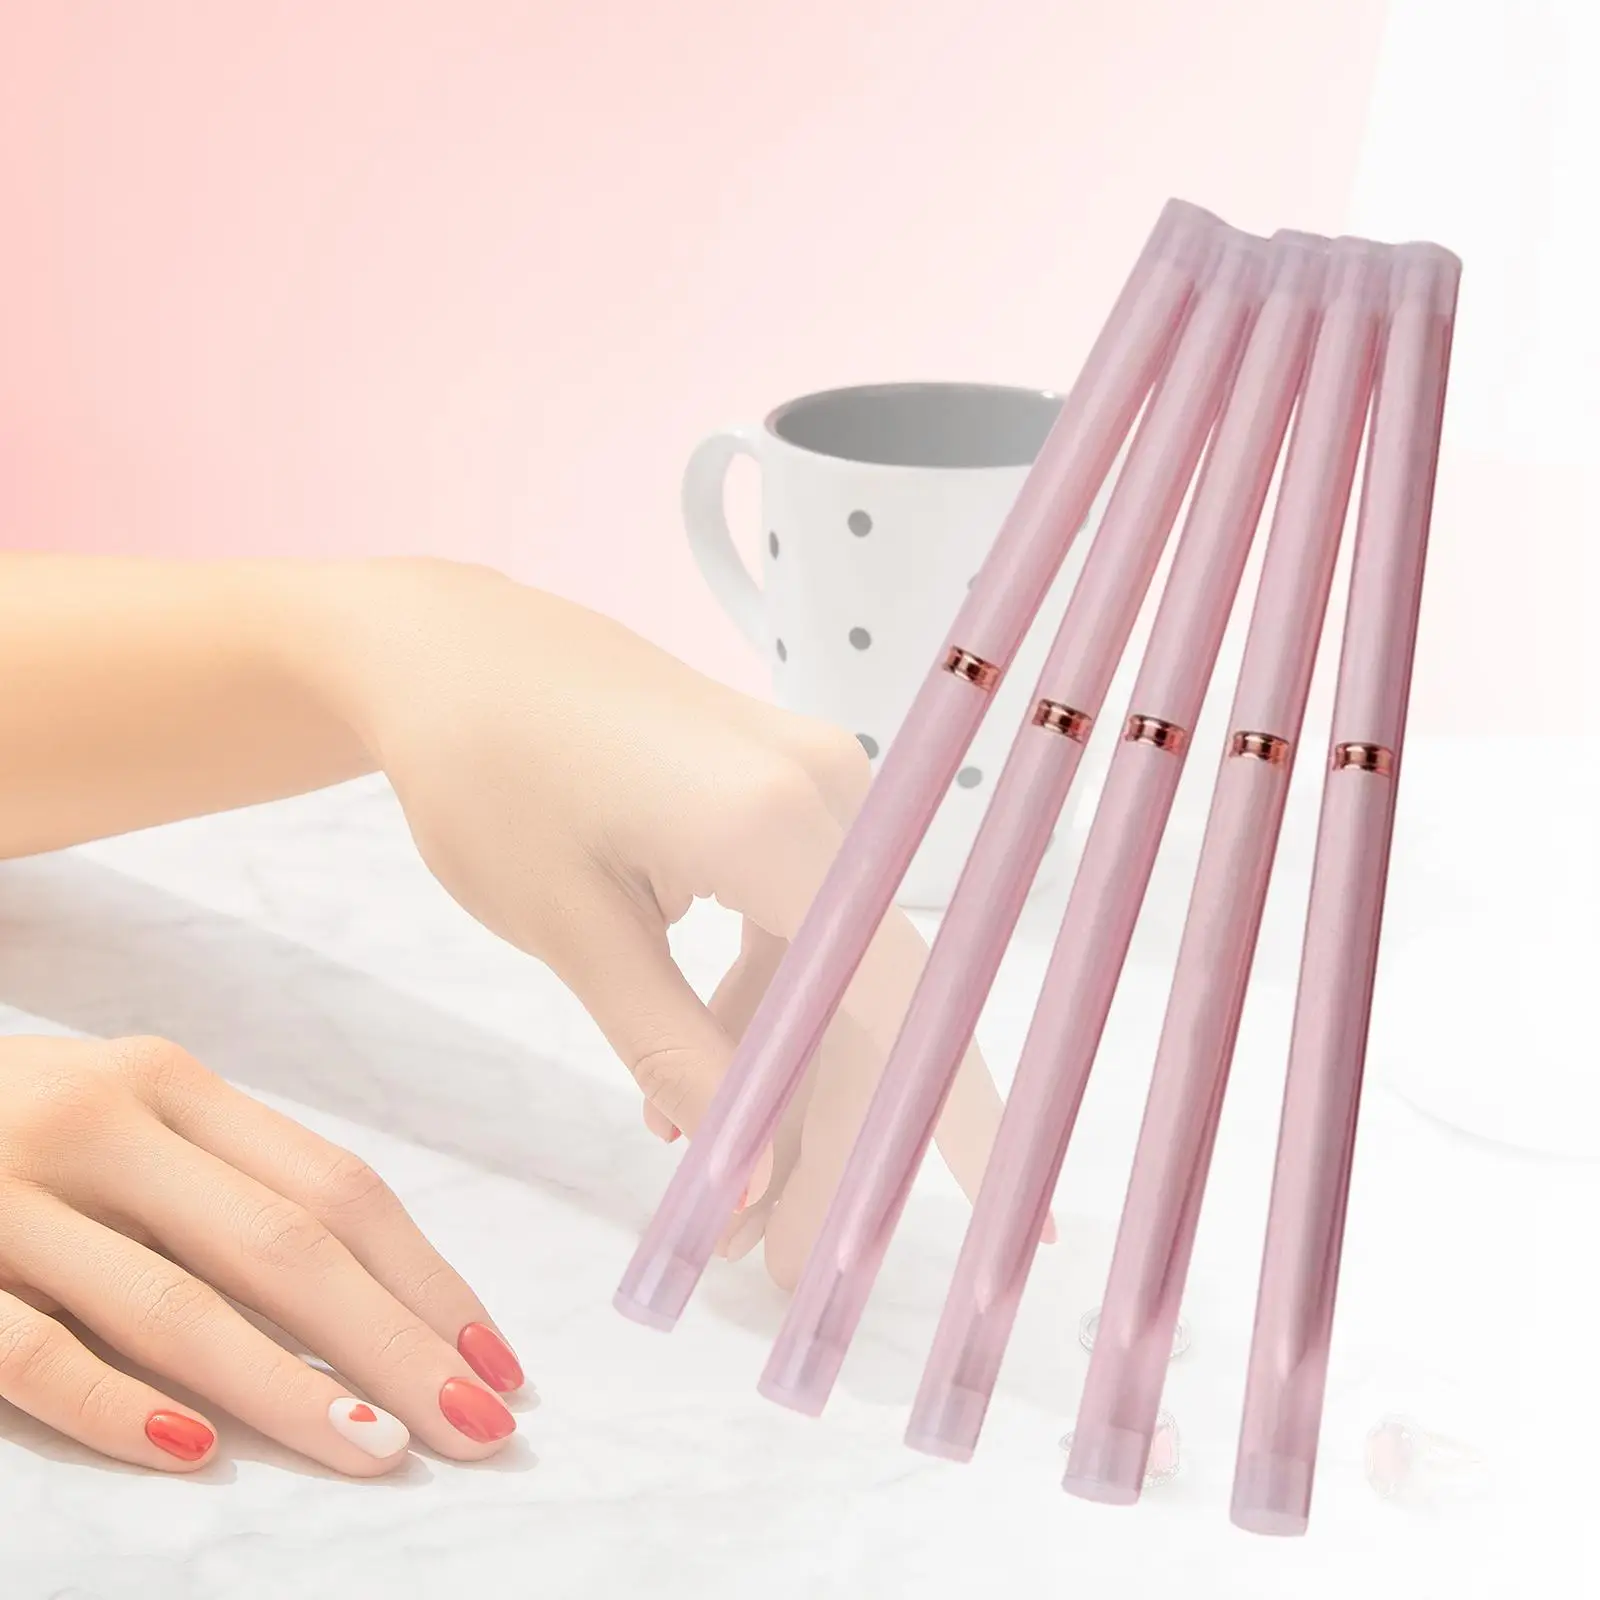 5Pcs Nail Art Liner Brush Set Metal Handle 4 mm-25mm Nail Art Pens for Long Lines Elongated Lines Nail Art Design Brushes Tool